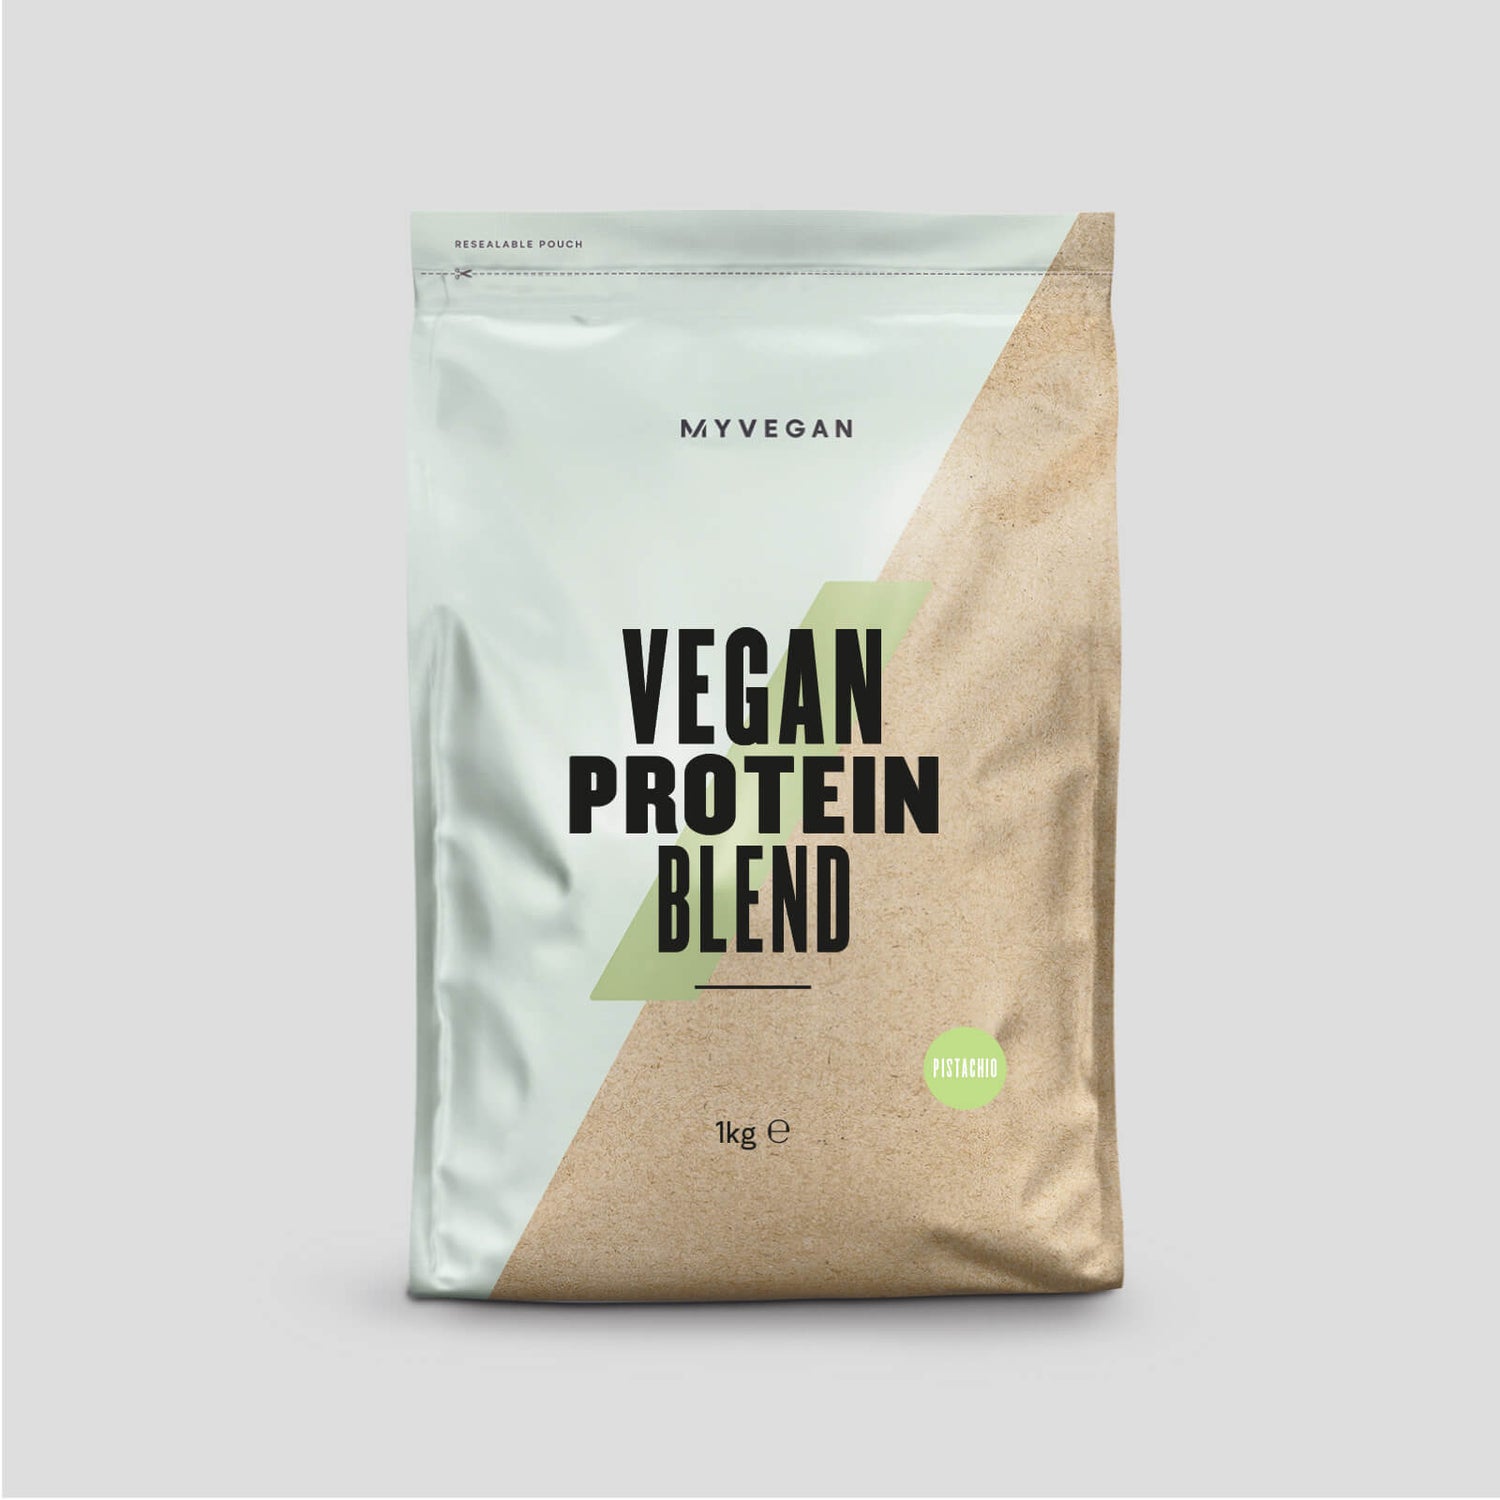 Vegan Protein Blend - Pistachio flavour